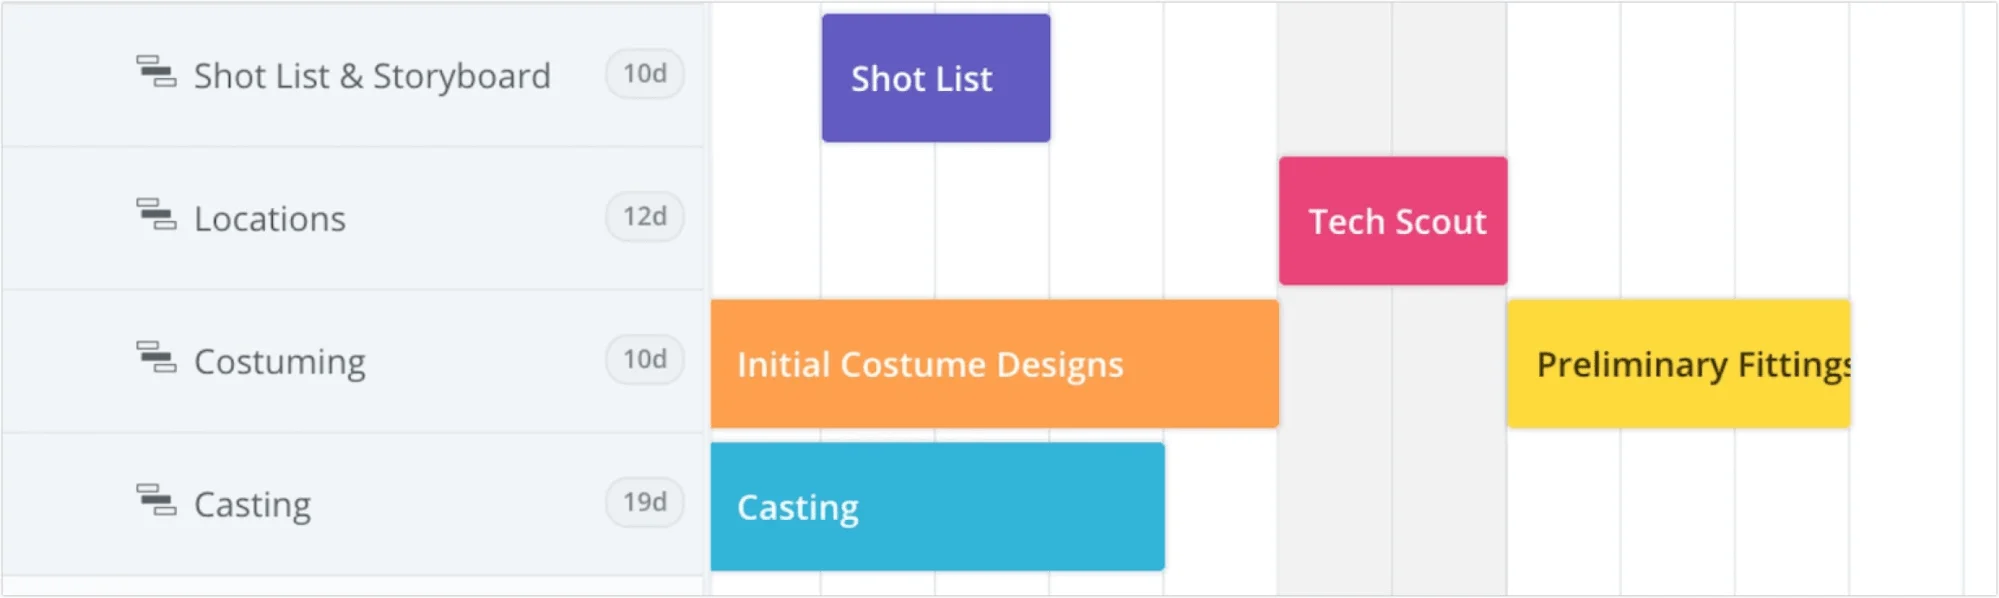 Production Planning Software - Events - Film Production Management Software - StudioBinder